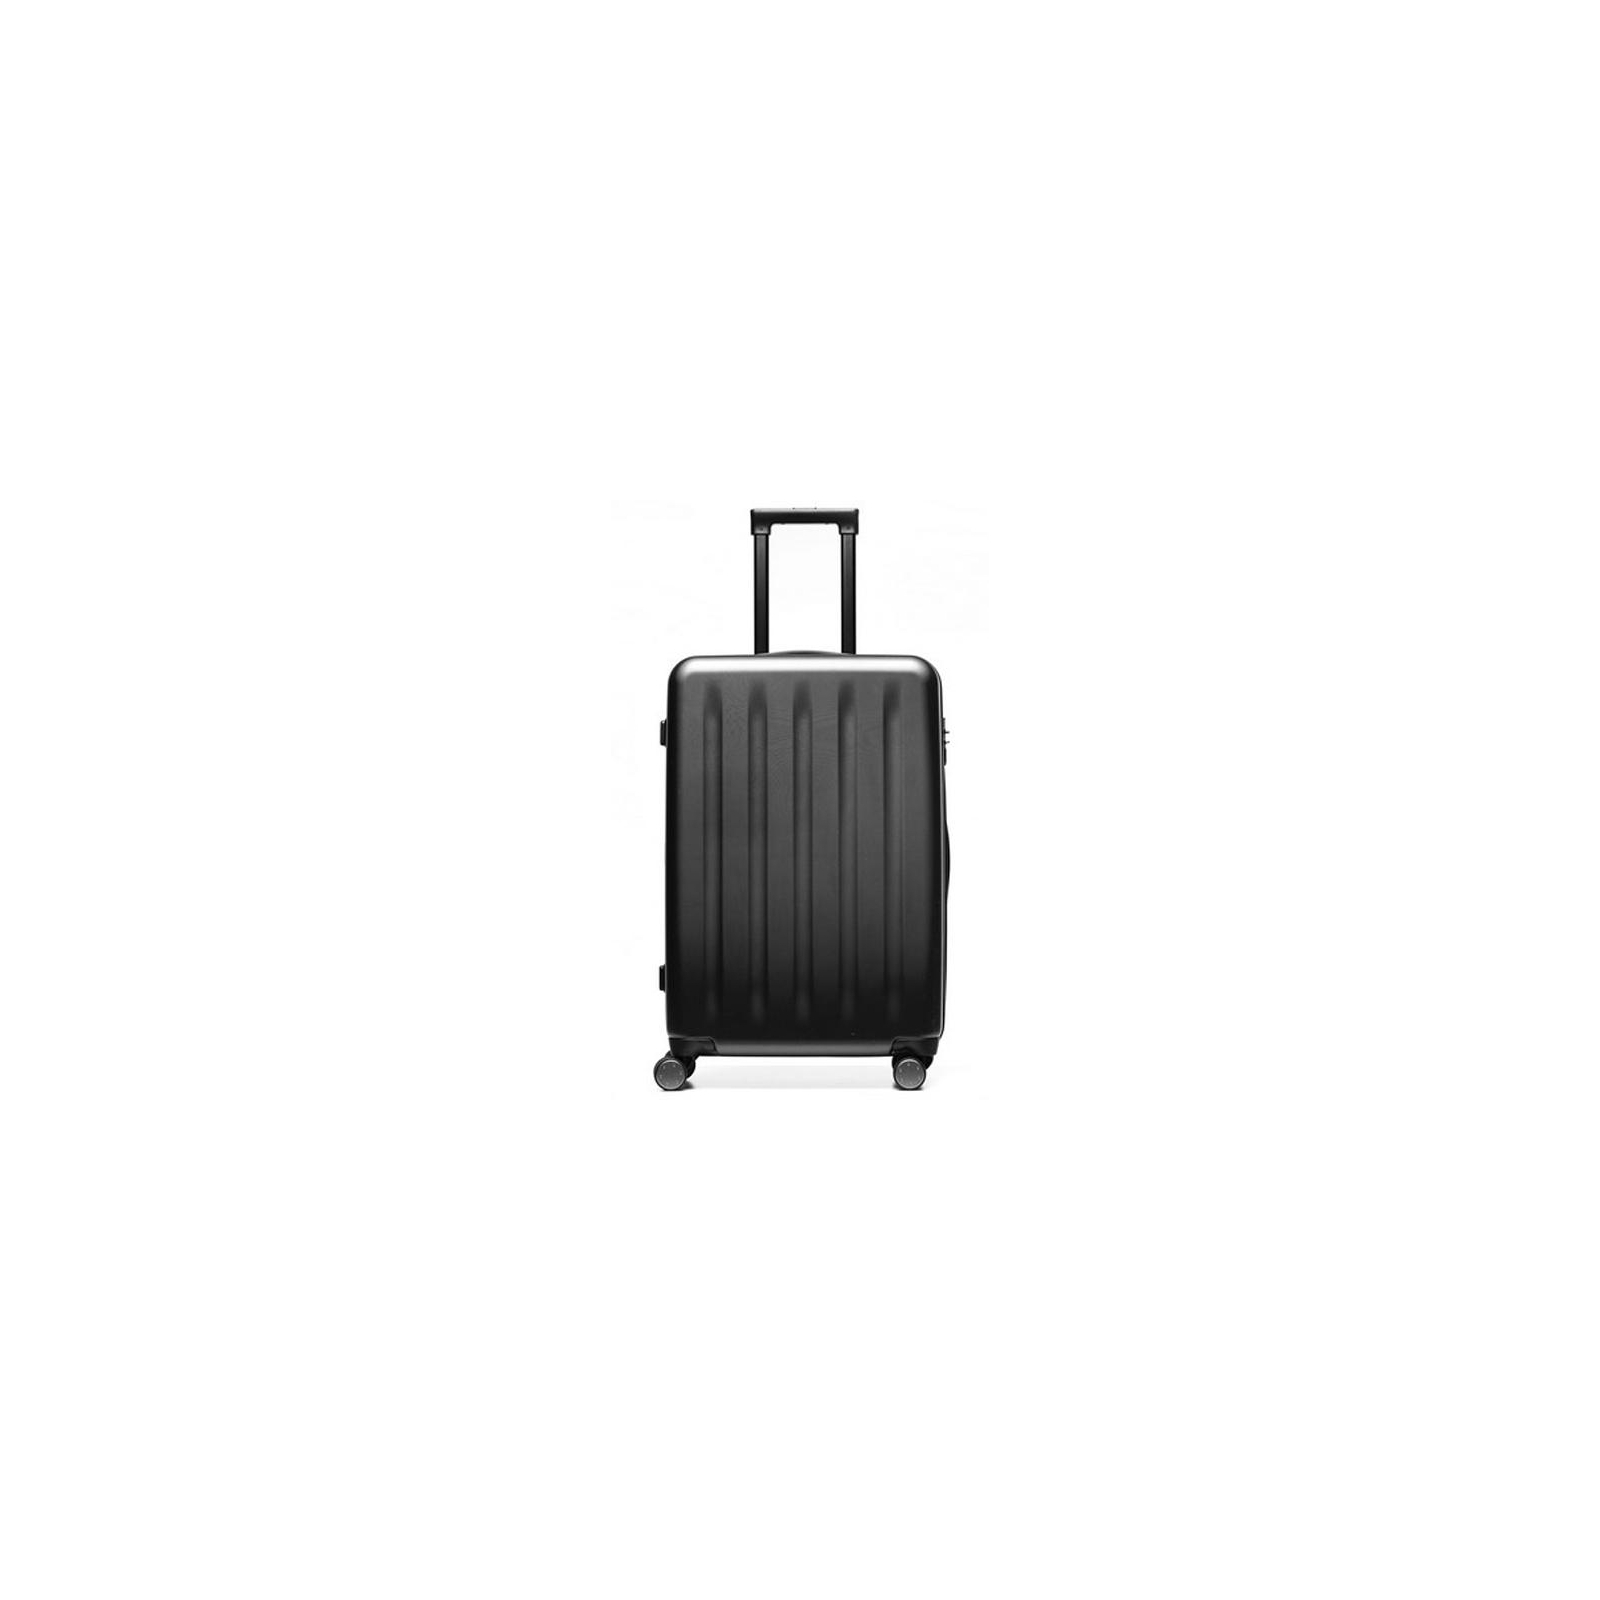 Валіза Xiaomi Ninetygo PC Luggage 28'' Blue (6970055341073)